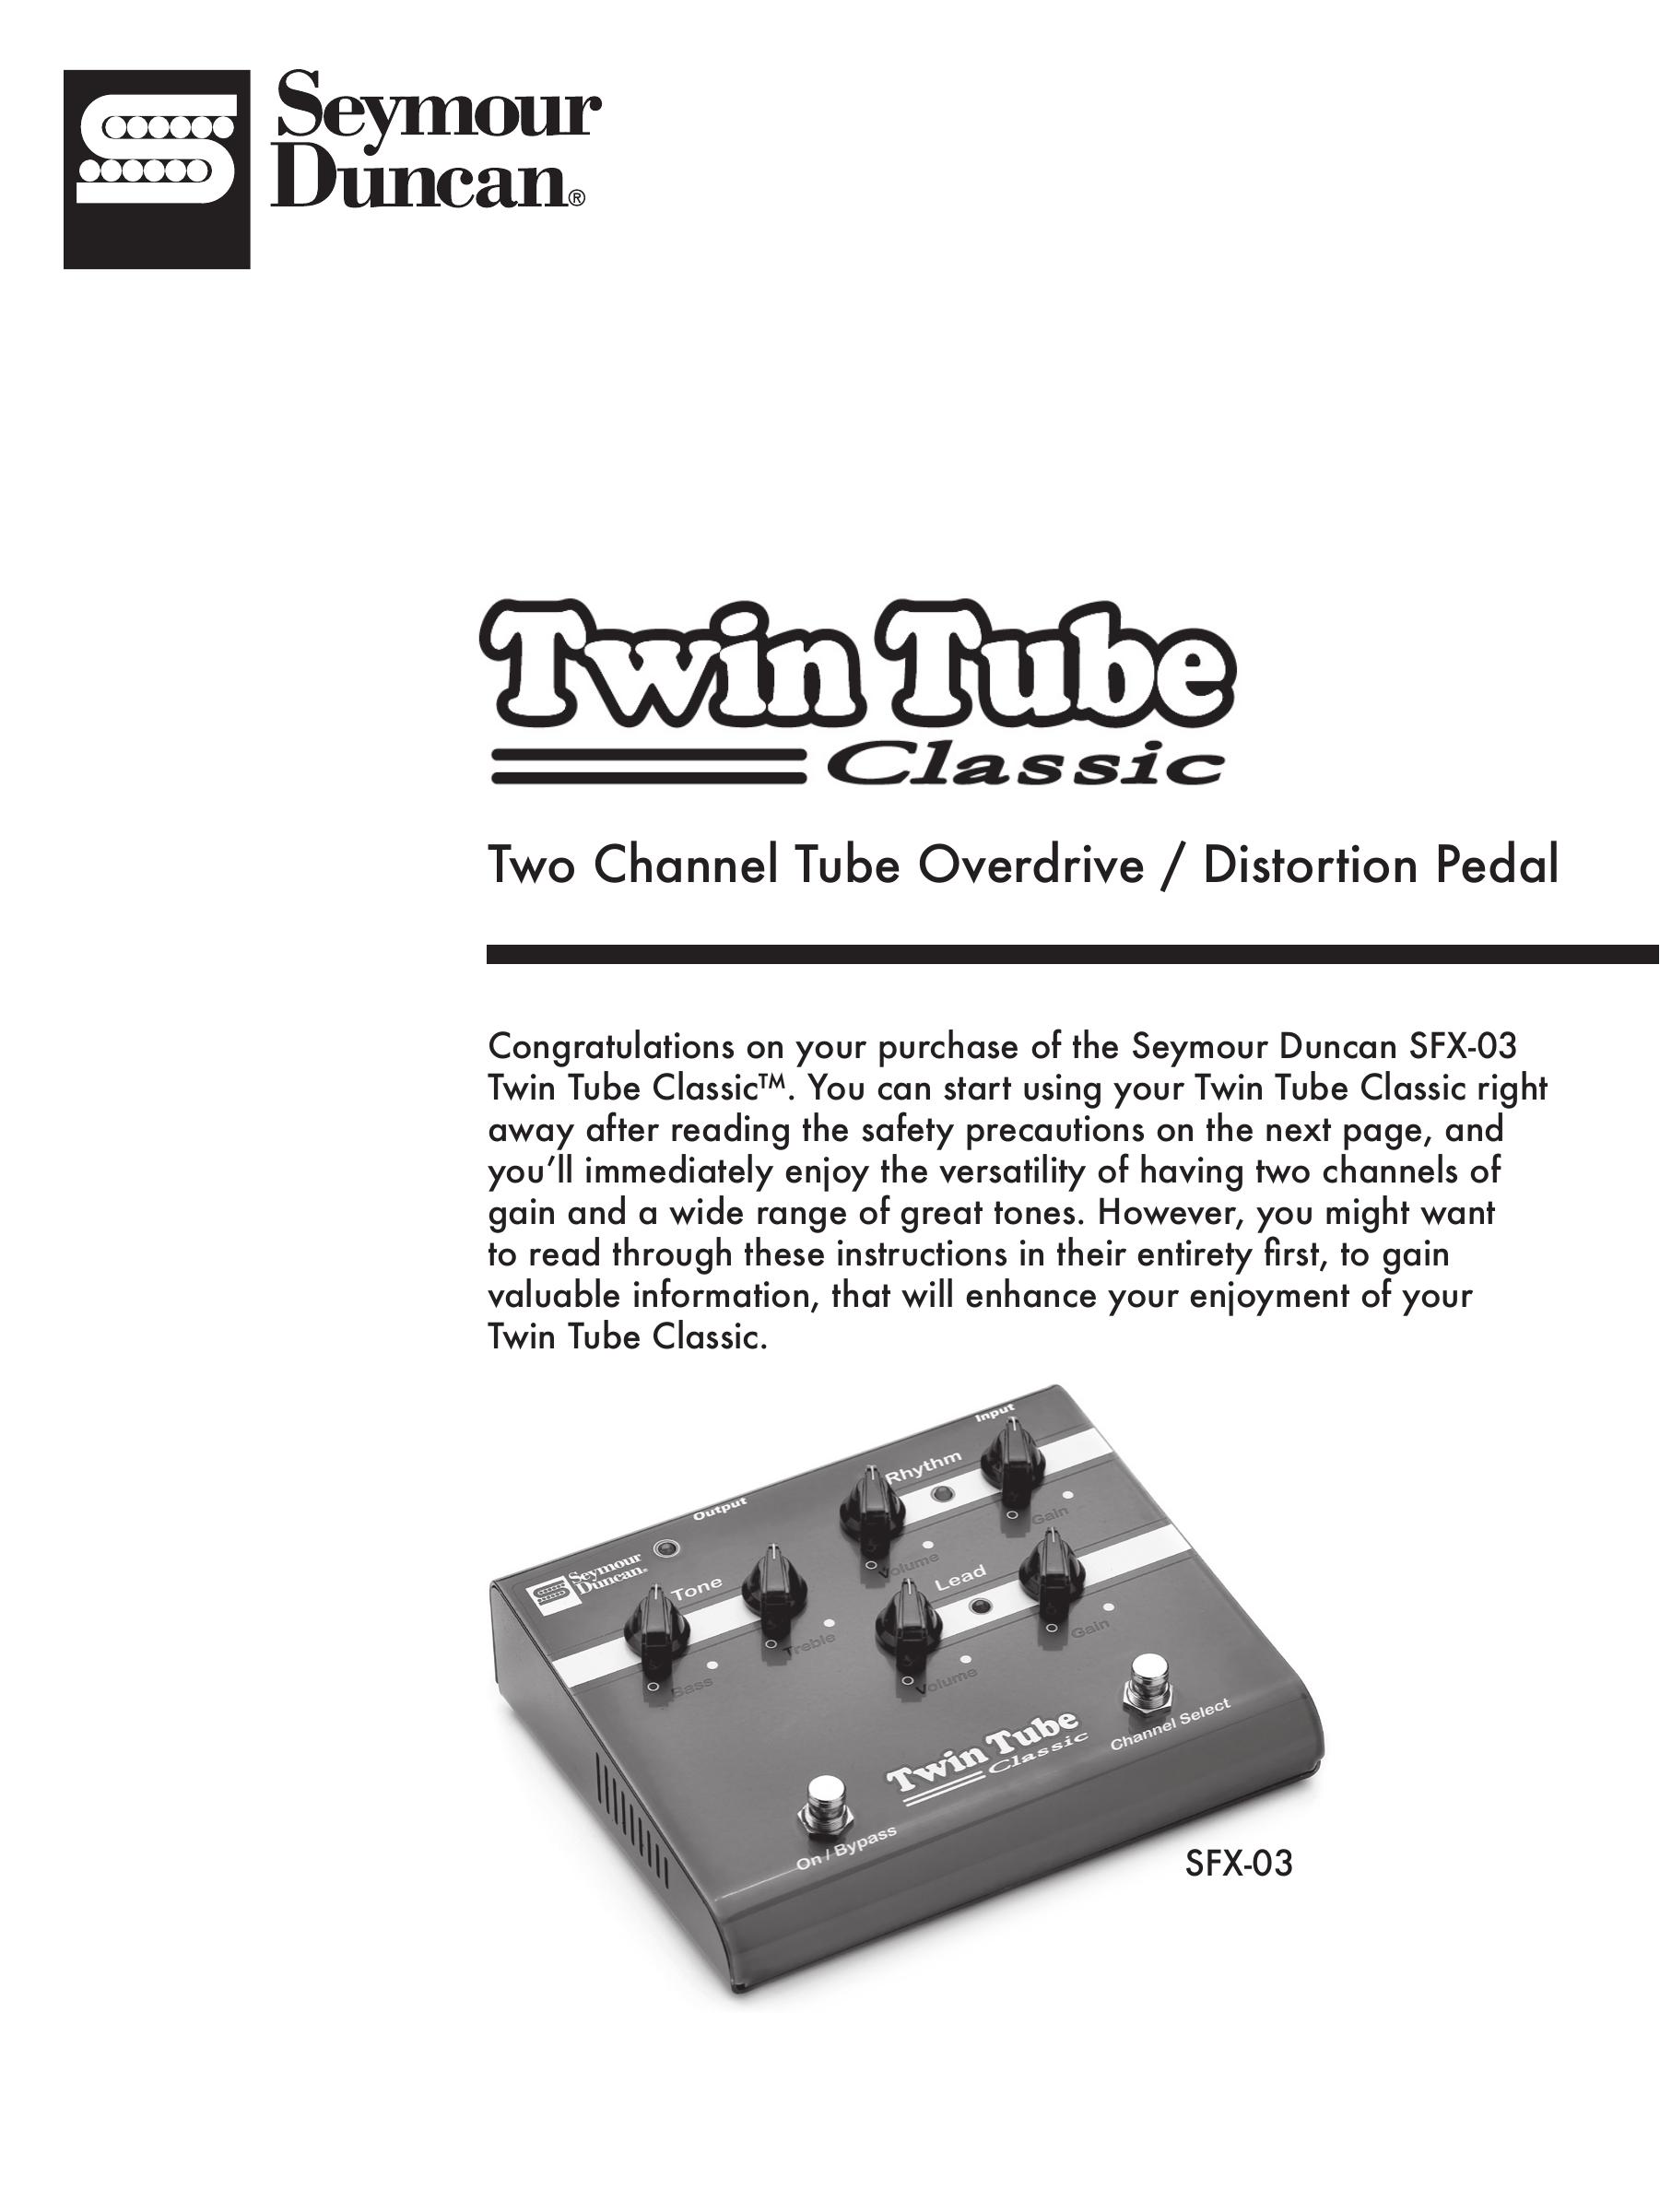 Seymour Duncan SFX-03 Music Pedal User Manual